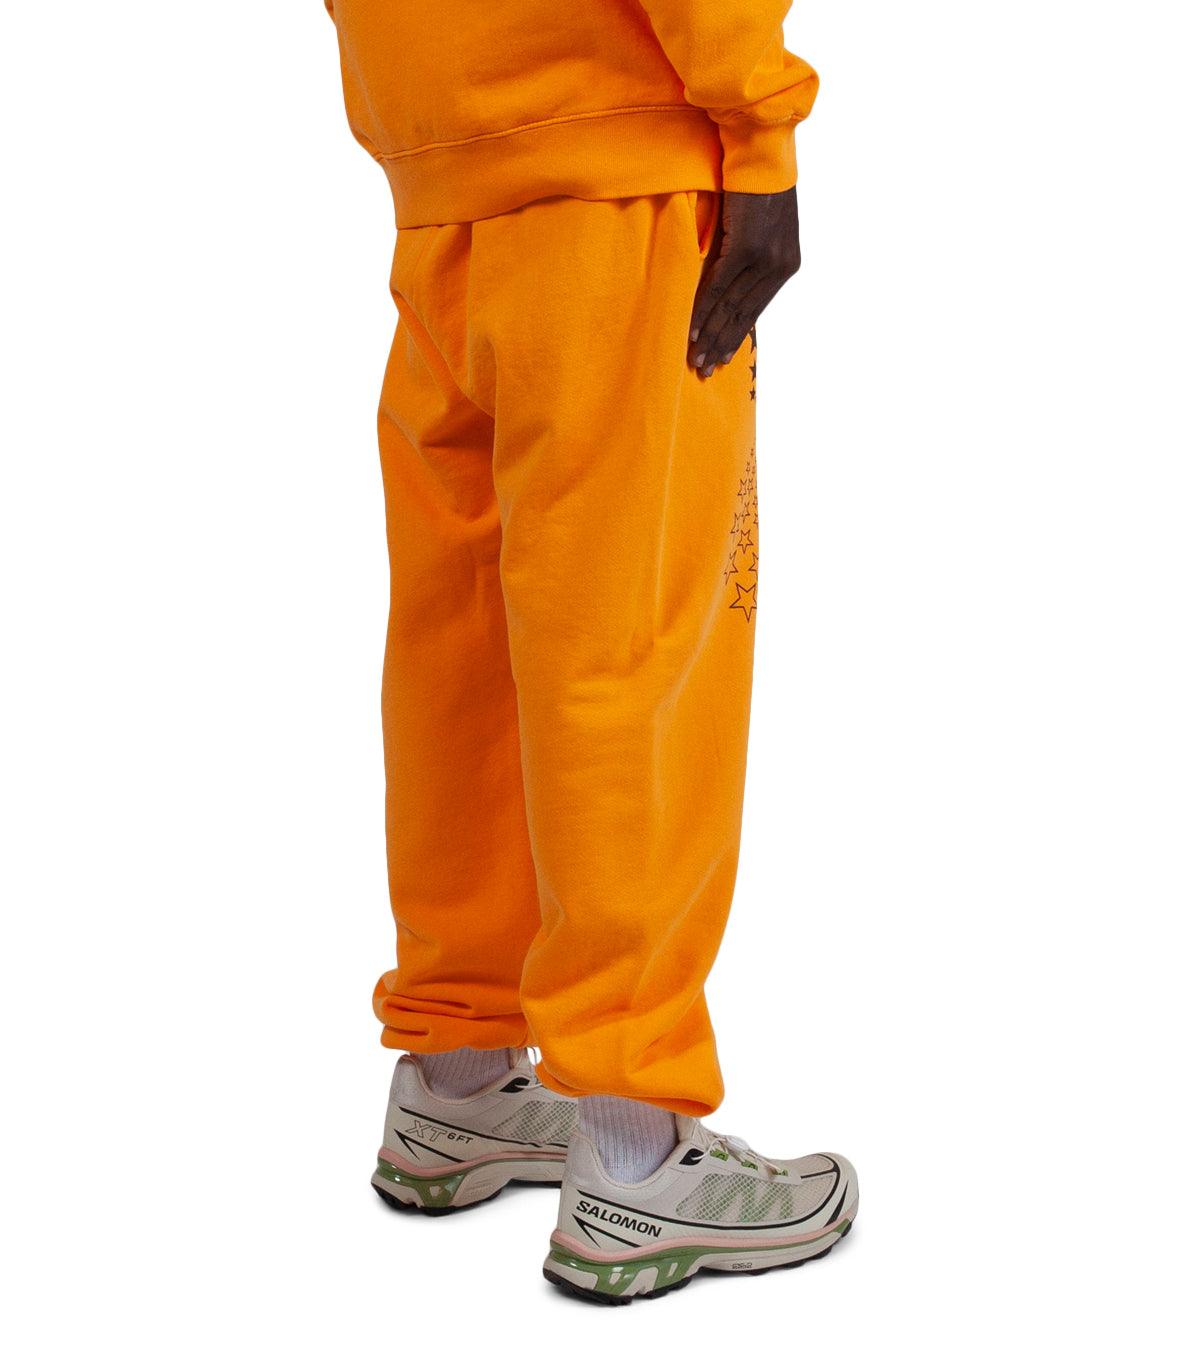 Bianca Chandon Yogi Sweatpants Orange | SOMEWHERE